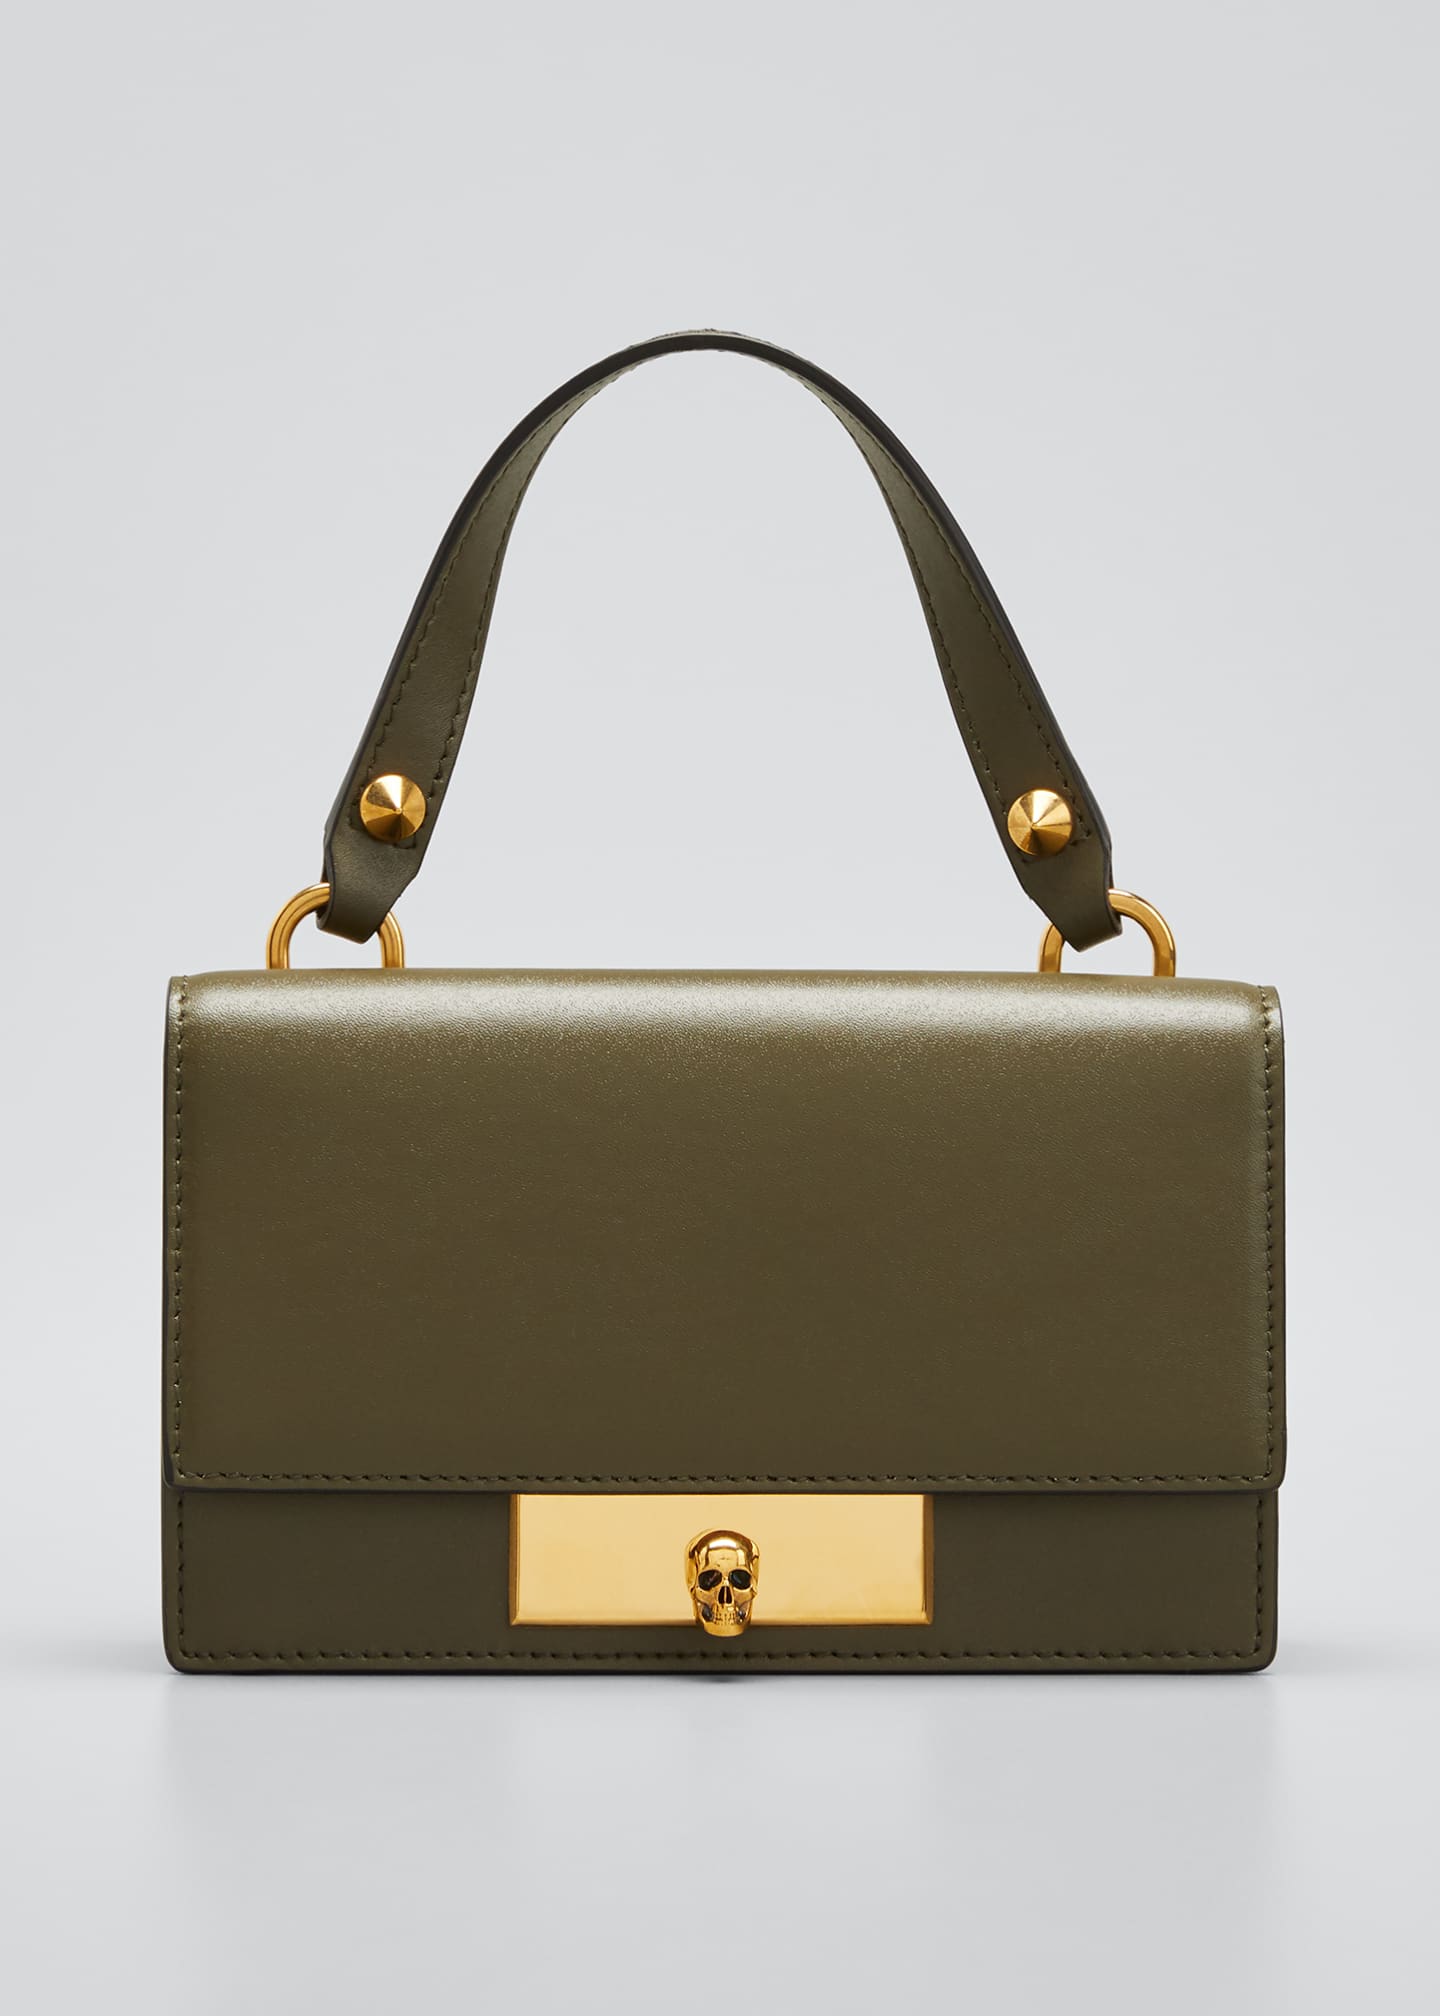 Gucci Dionysus Small Web-Stripe Top-Handle Satchel Bag